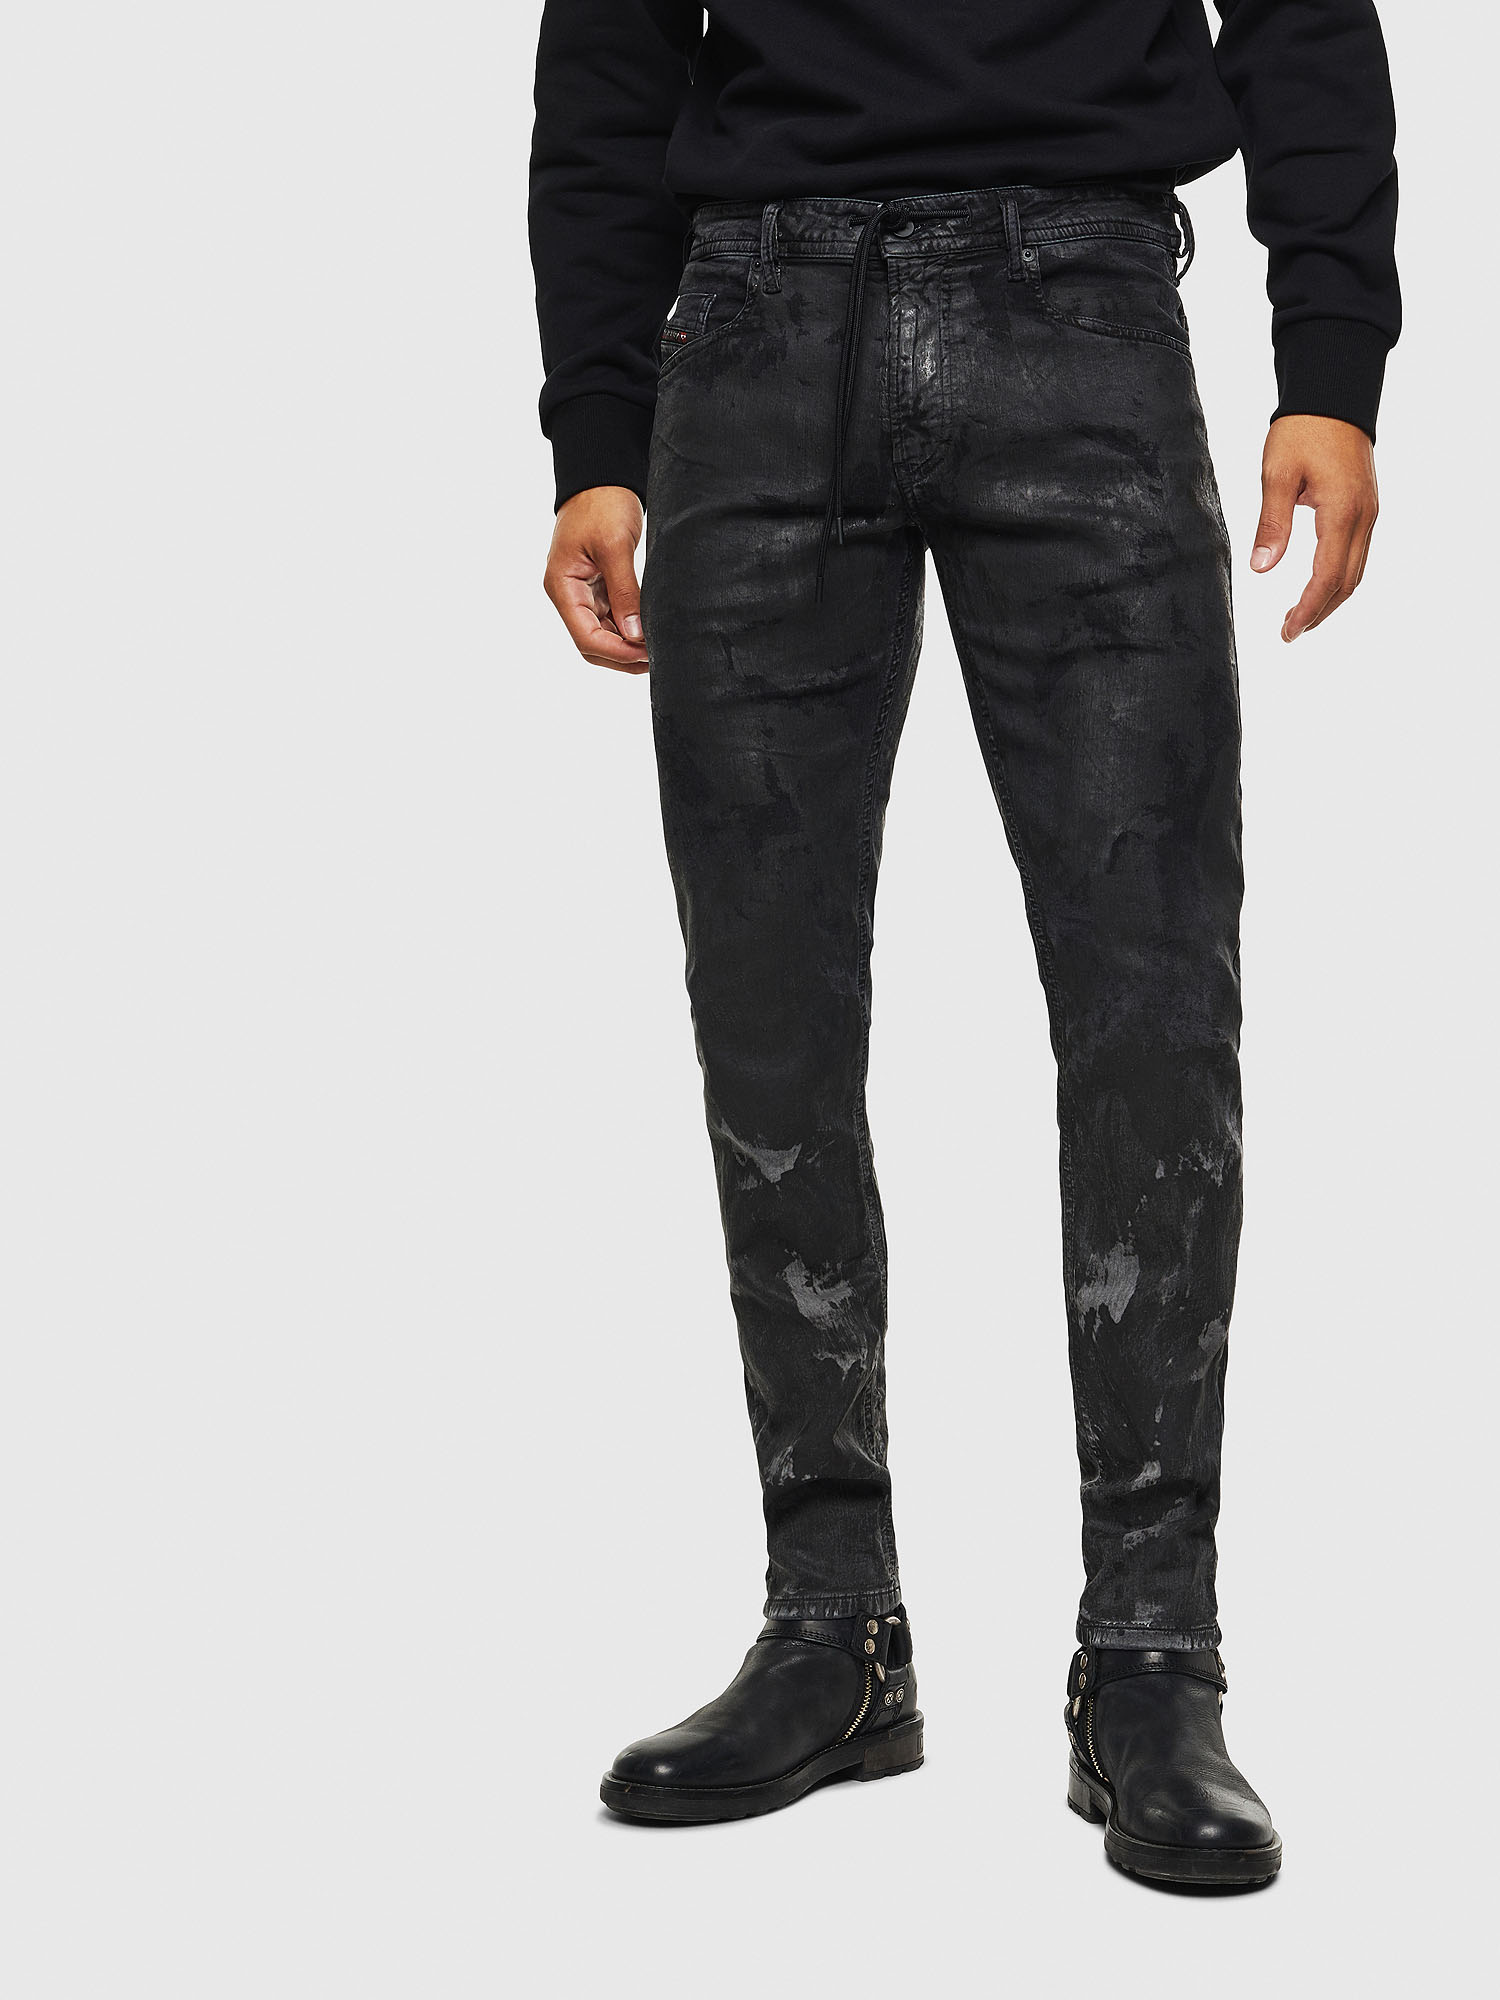 Thommer JoggJeans 084AI Man: Slim Black/Dark grey Jeans | Diesel